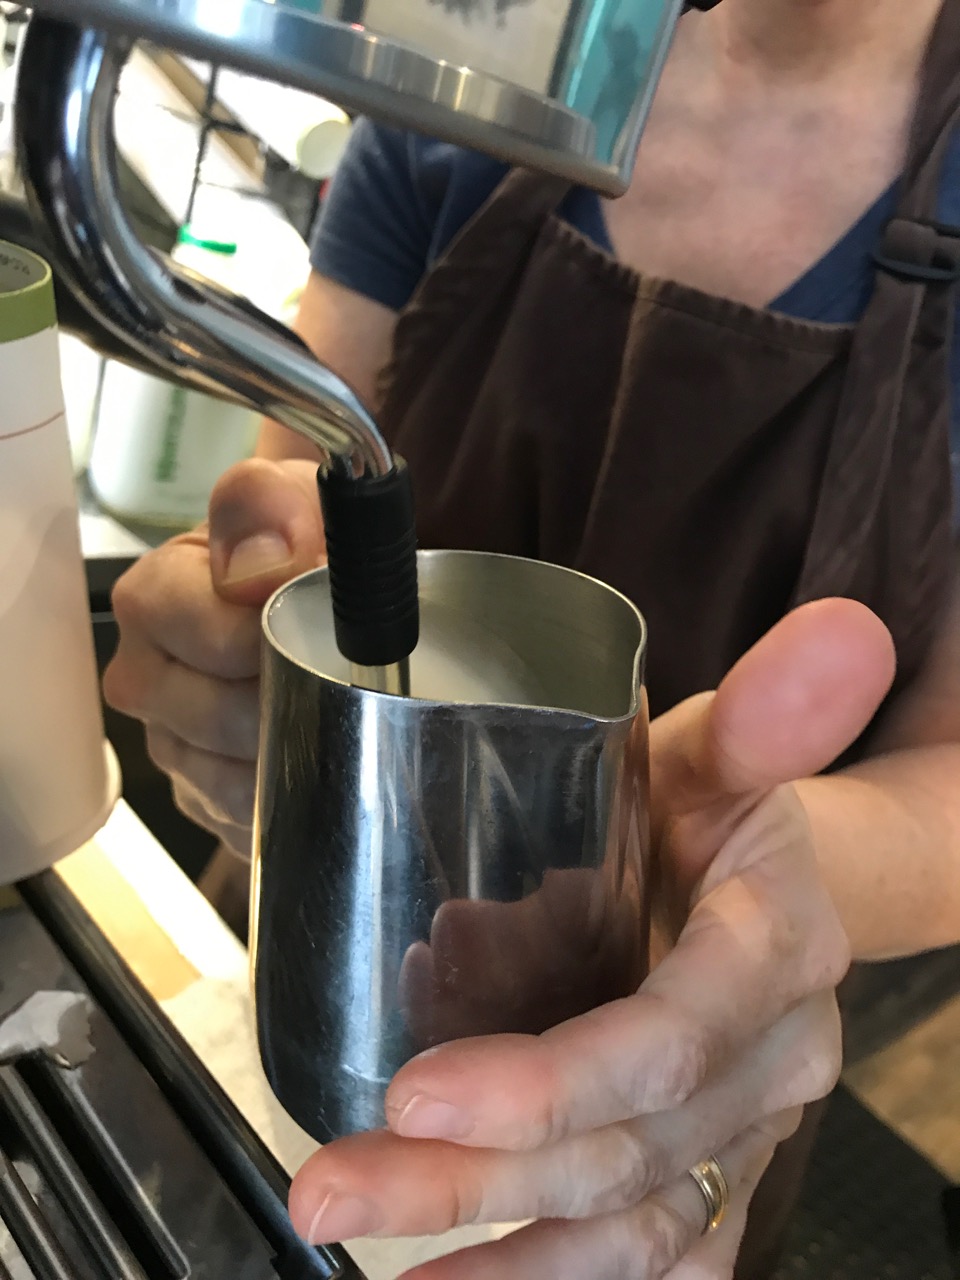 Close-up of barista's hands holding mug at coffee machine